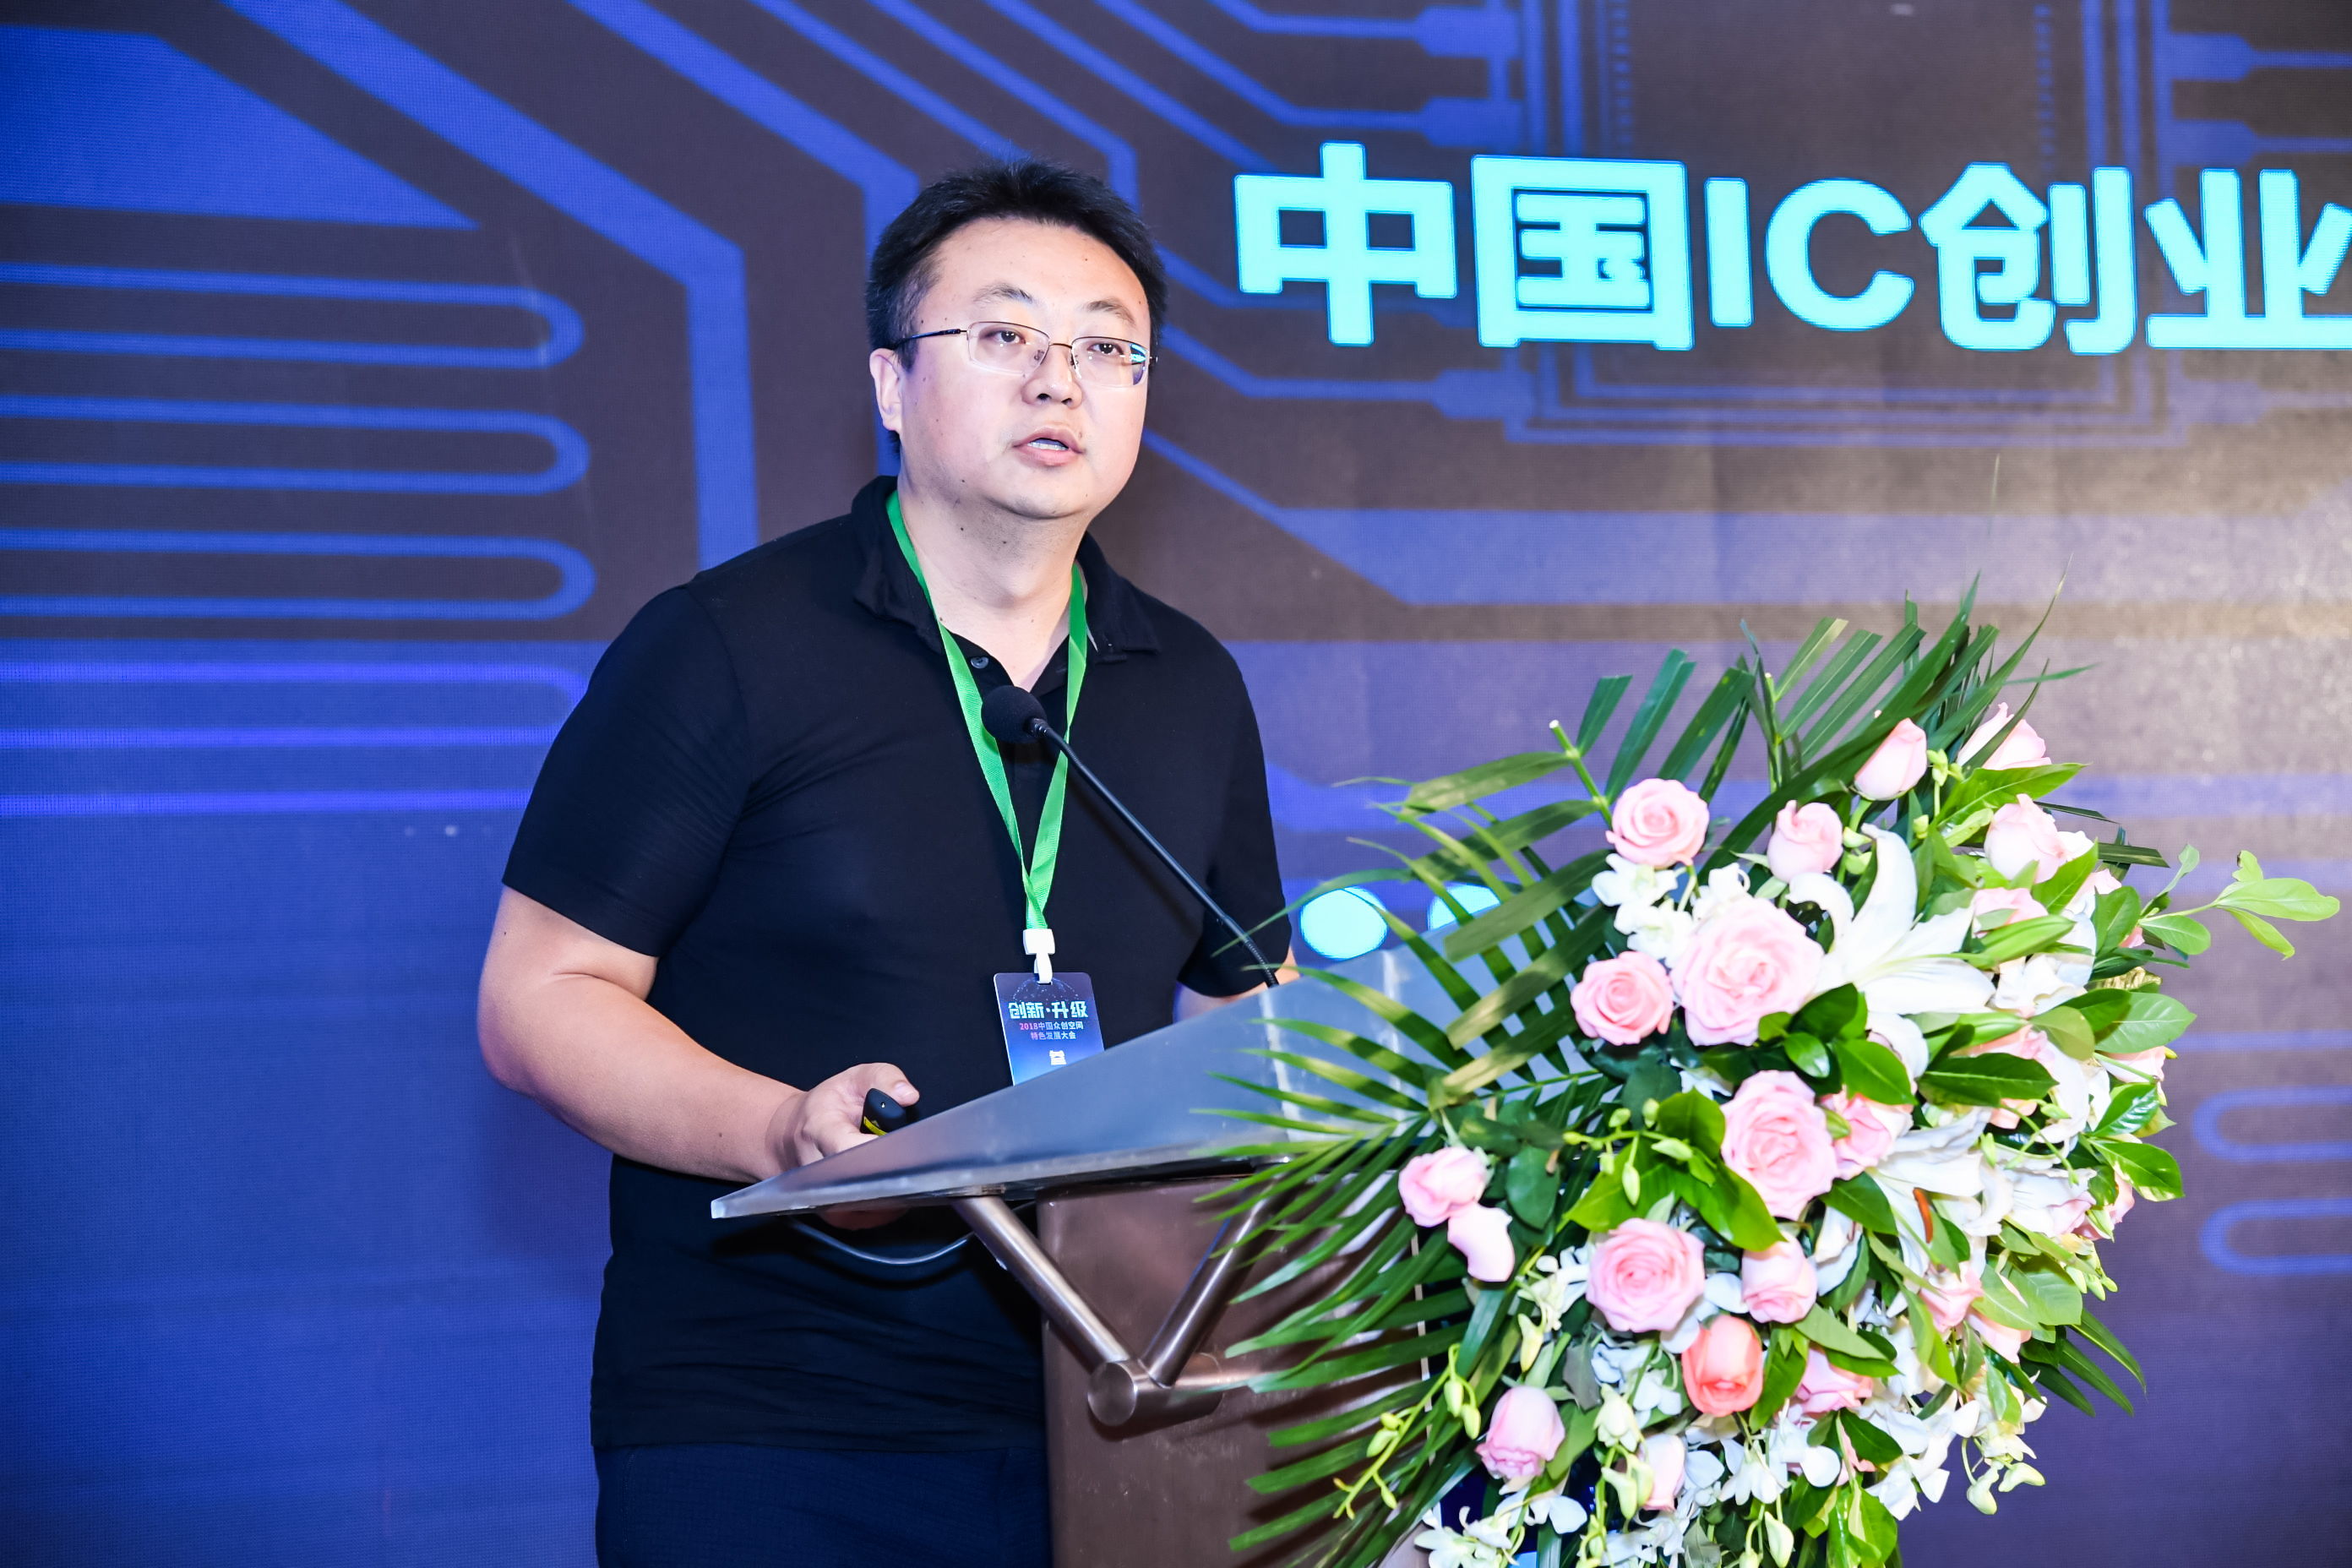 IC咖啡CEO王欣宇：在集成电路行业创业，会遇到的三大问题